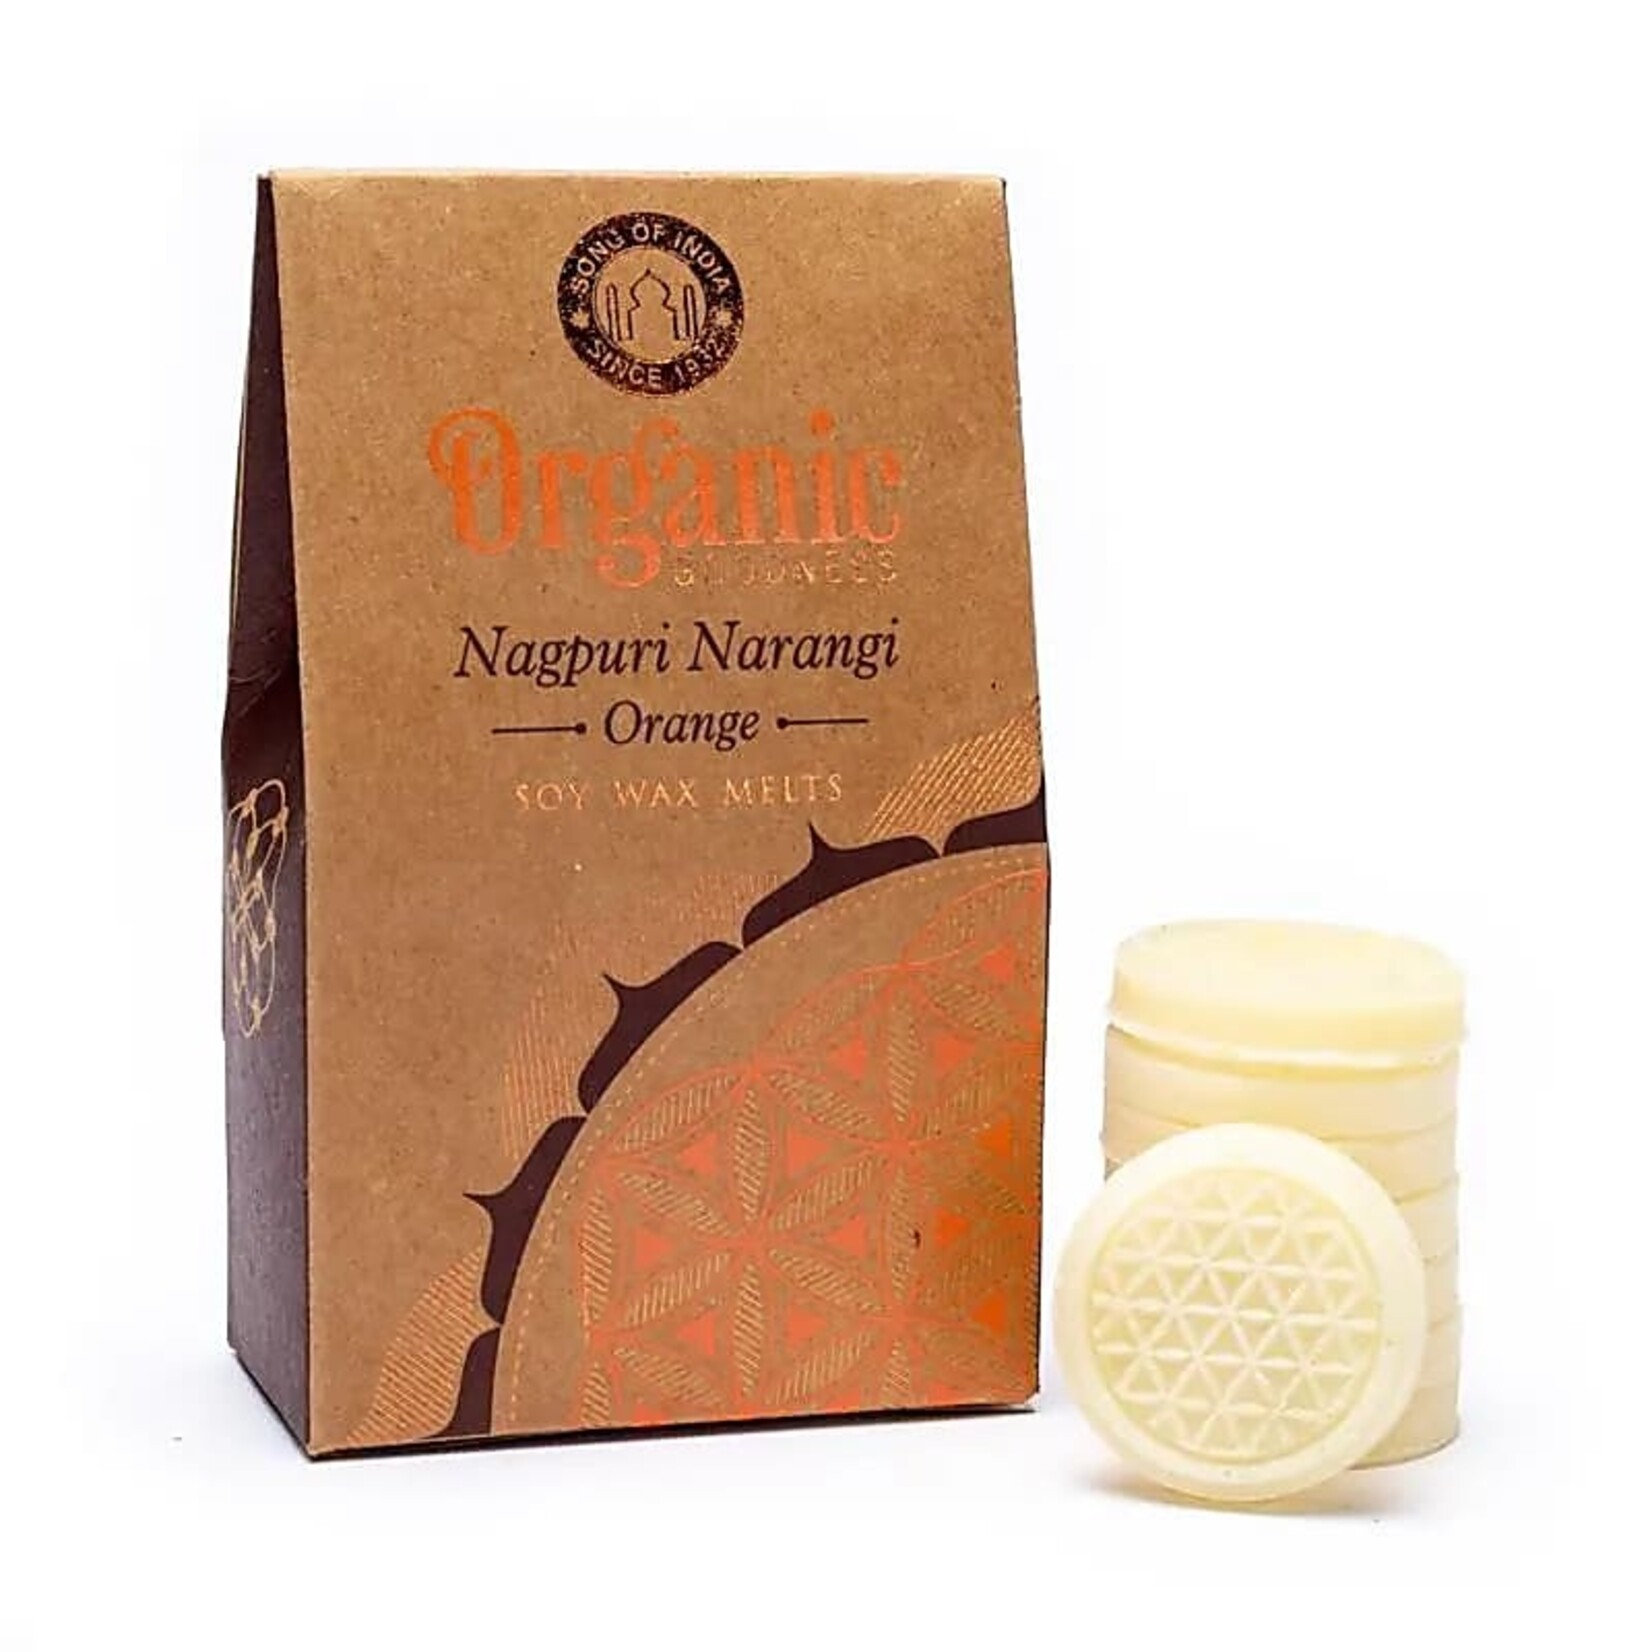 Nagpuri Narangi Sinaasappel smeltkaarsjes/wax melts -- 40 g